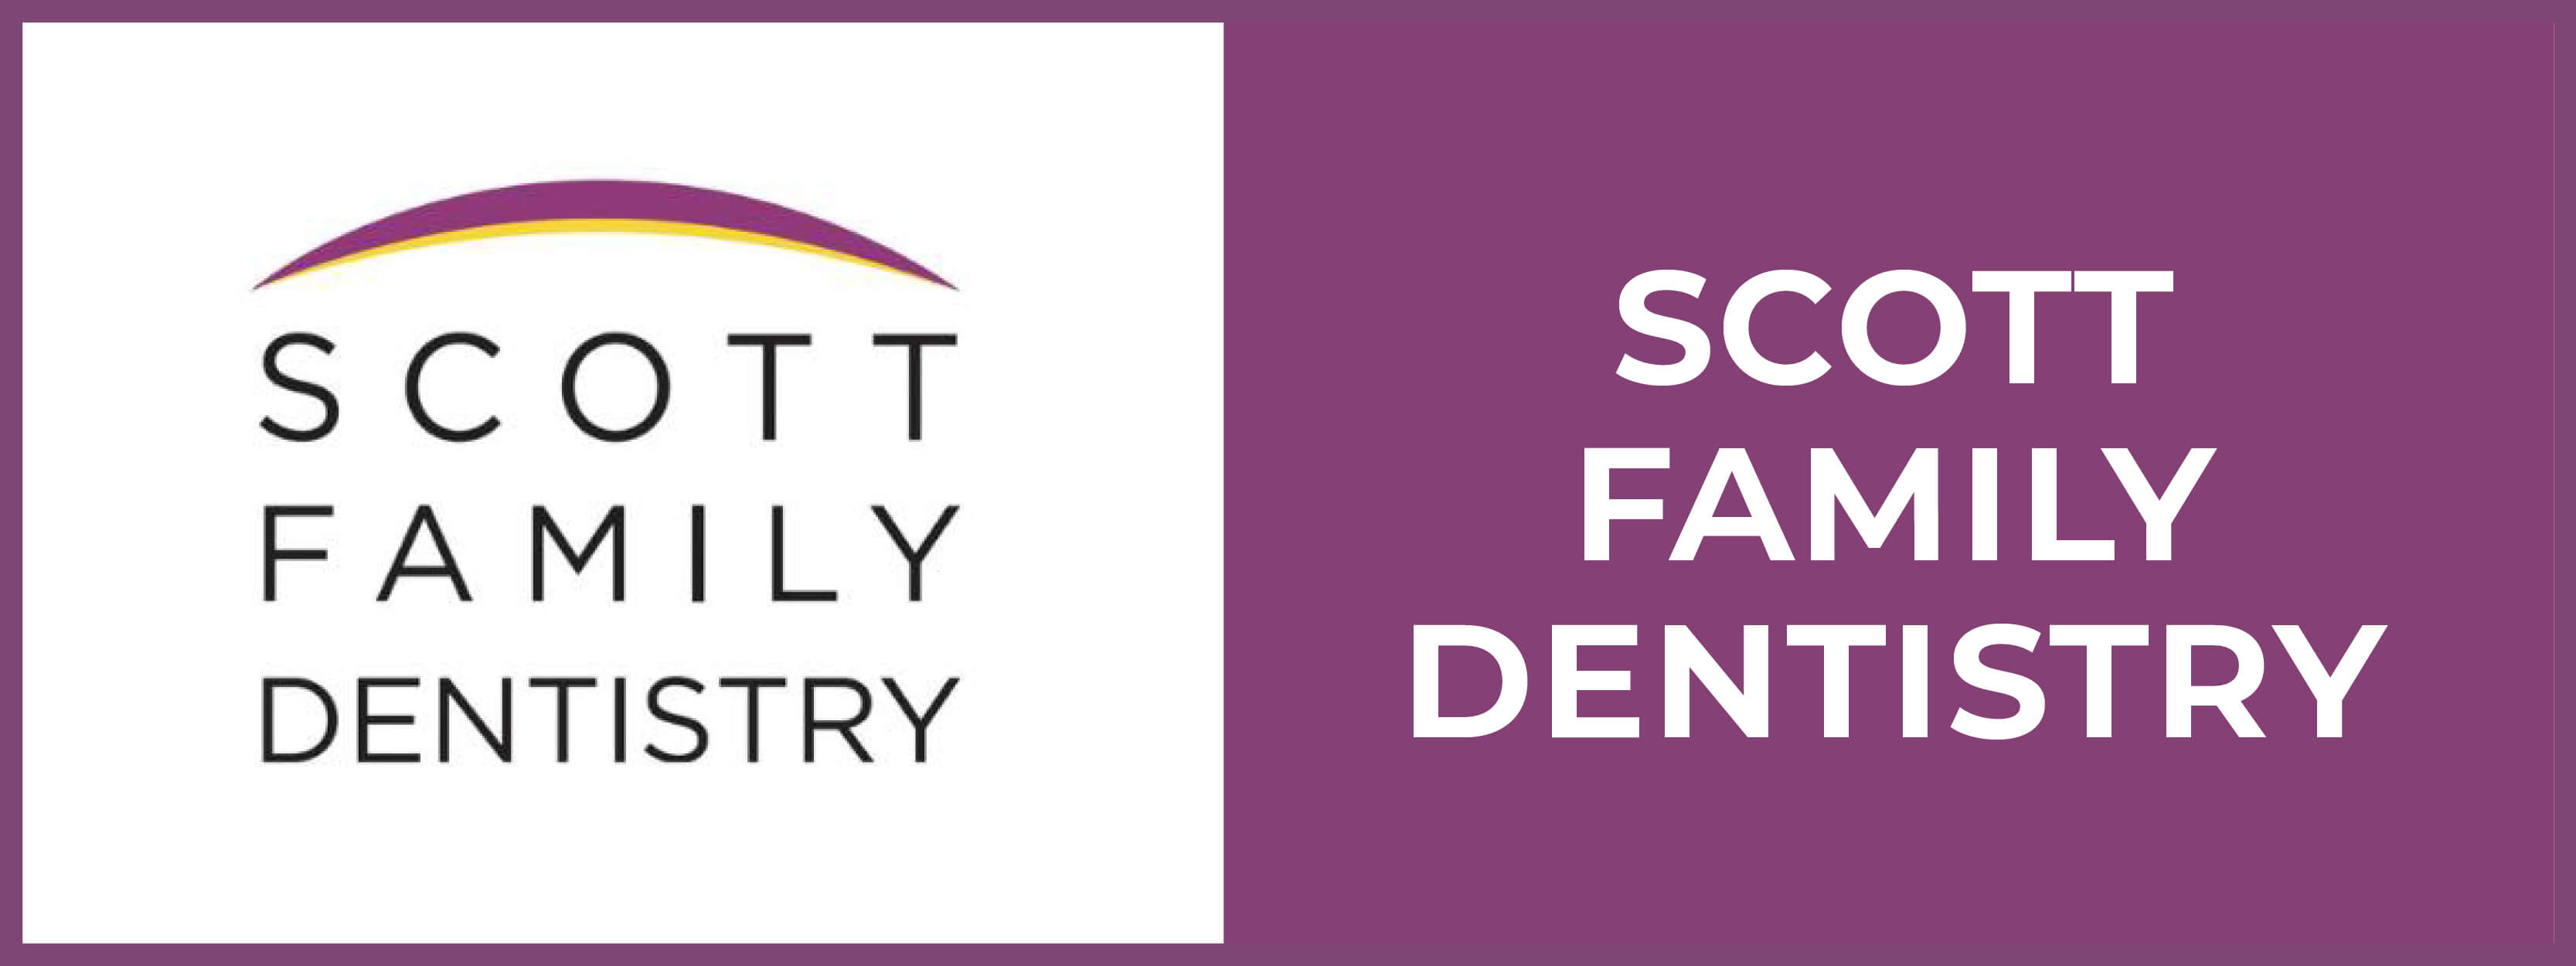 Scott Family Dentistry button